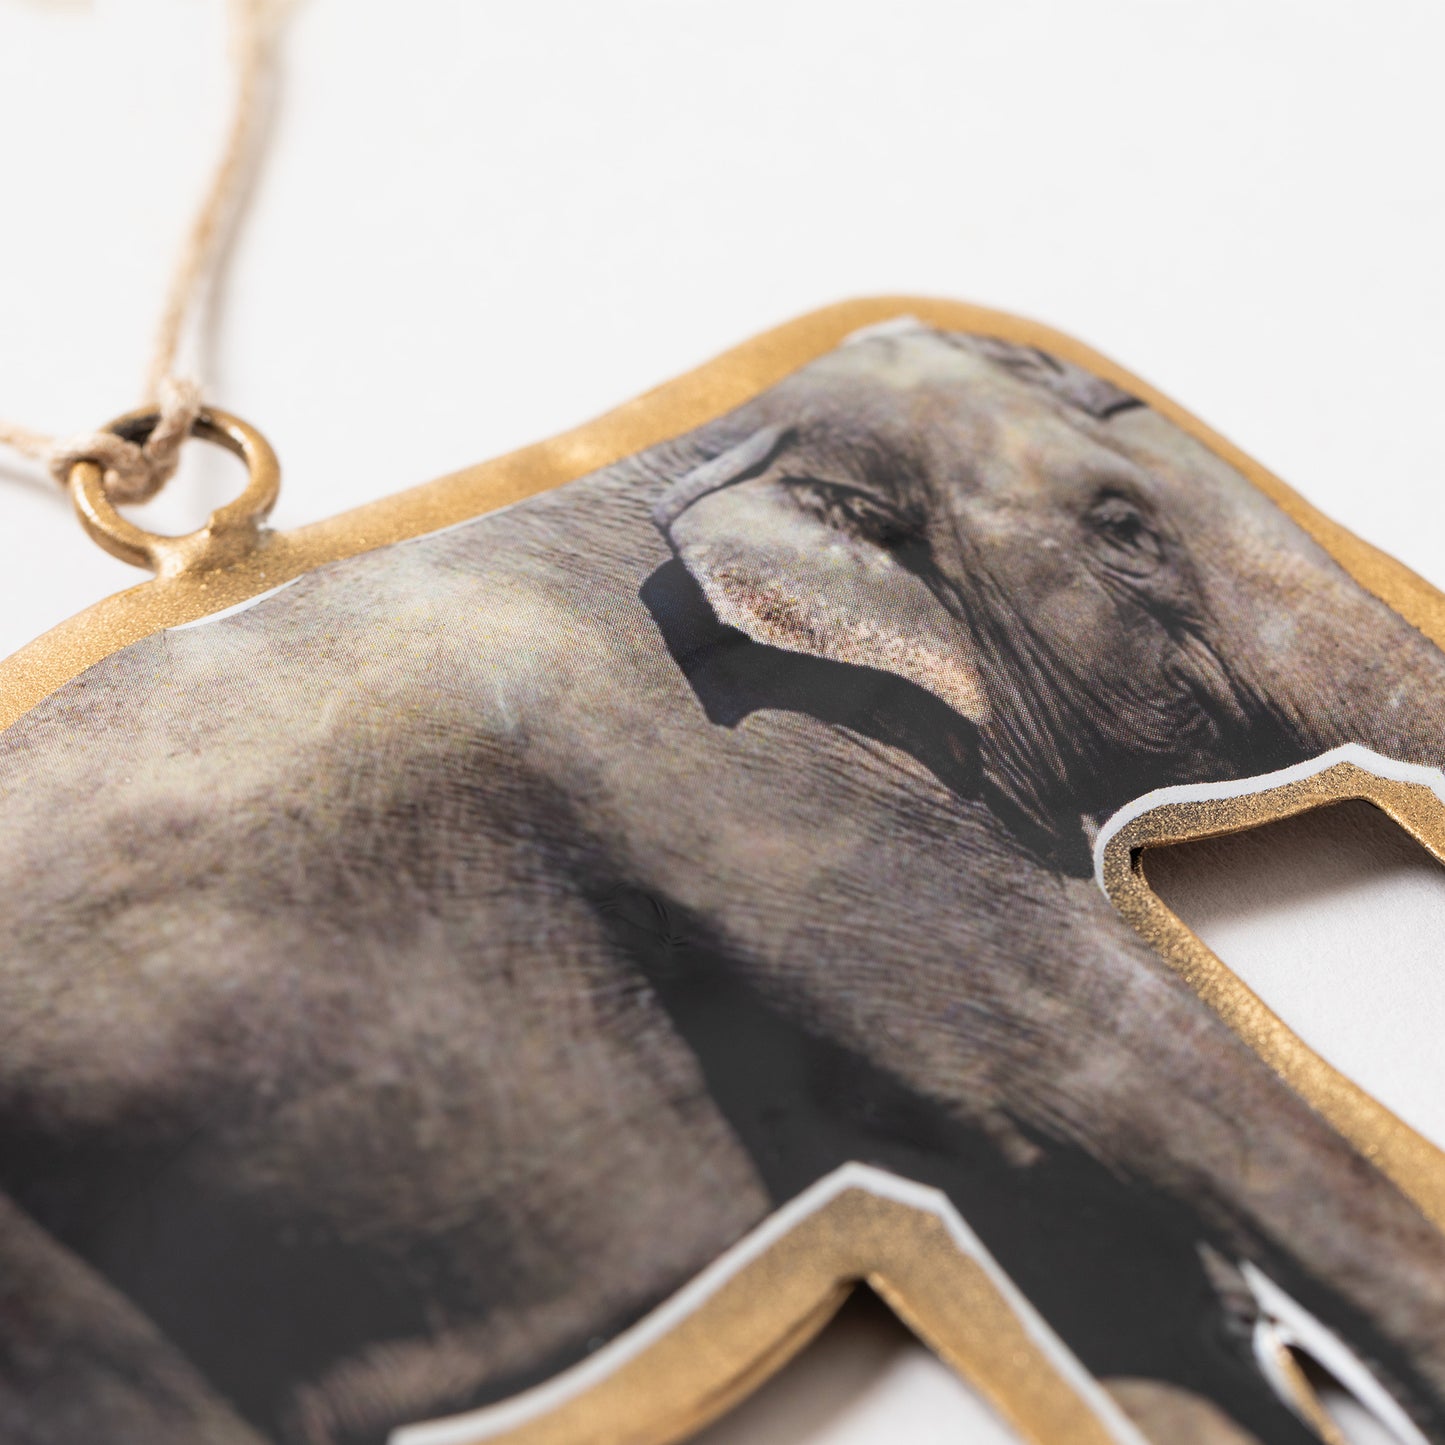 Love For Elephants Metal Ornament